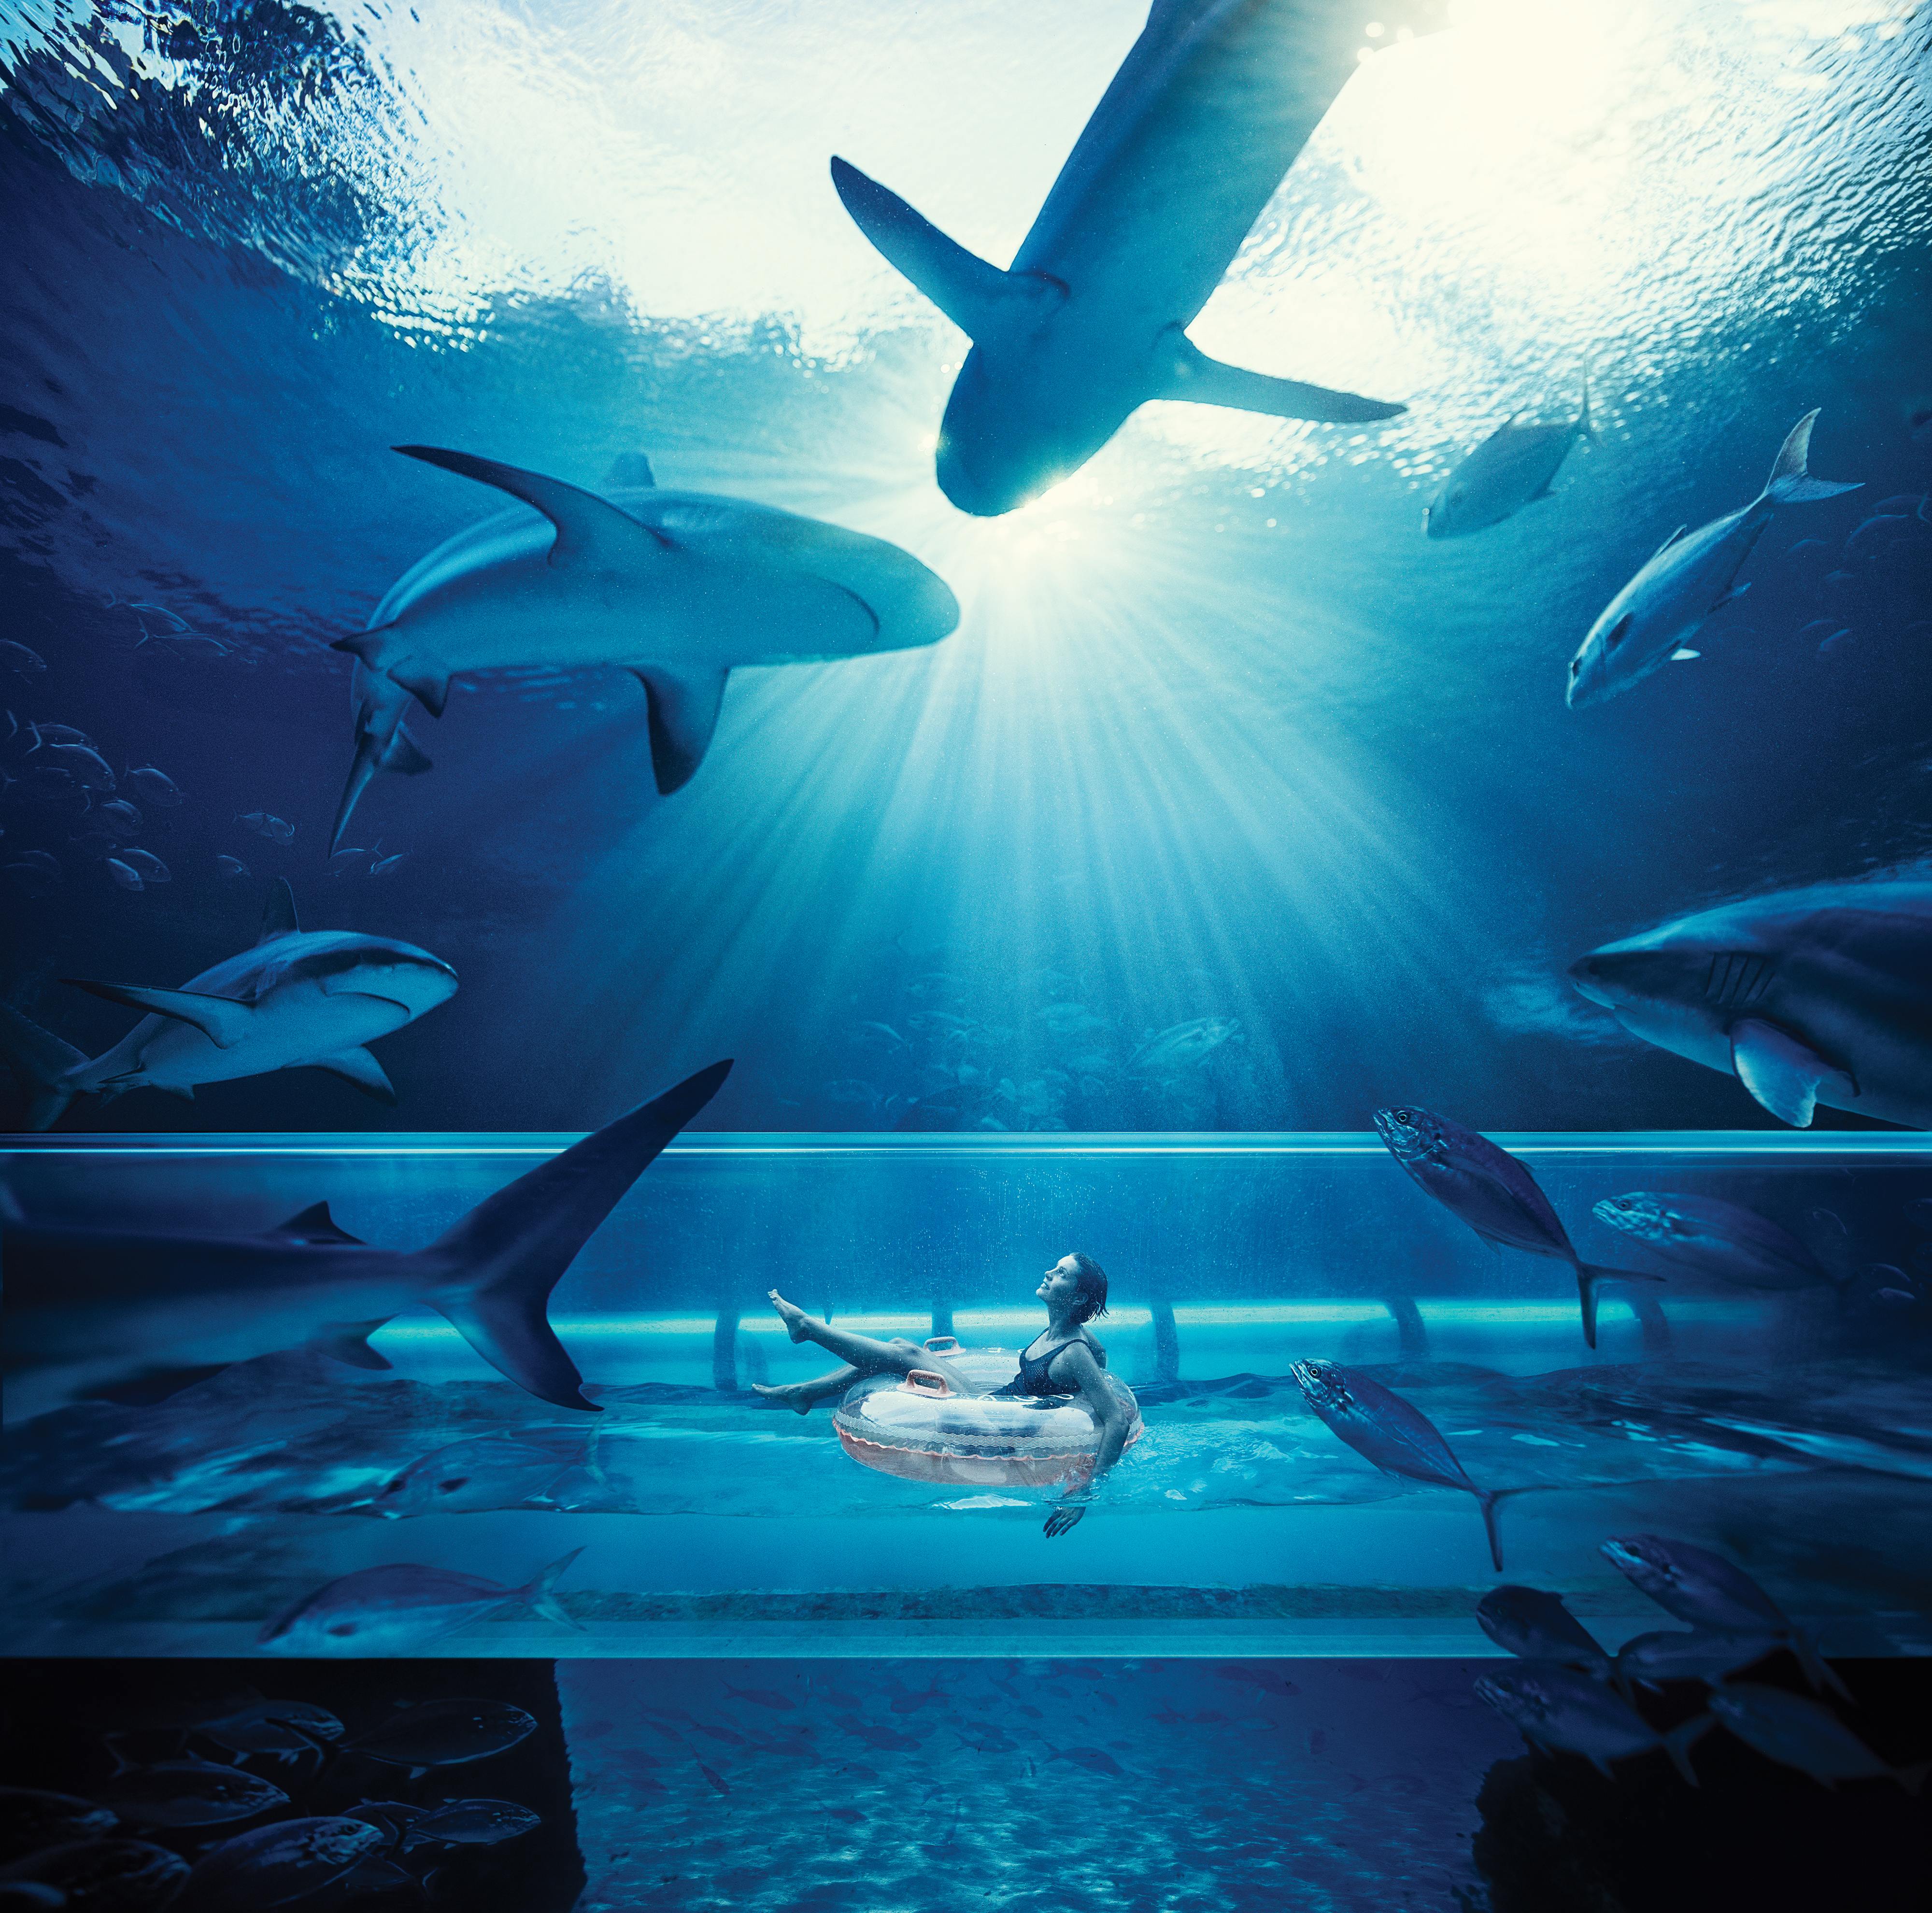 7. Having an Aquaadventure at The Atlantis